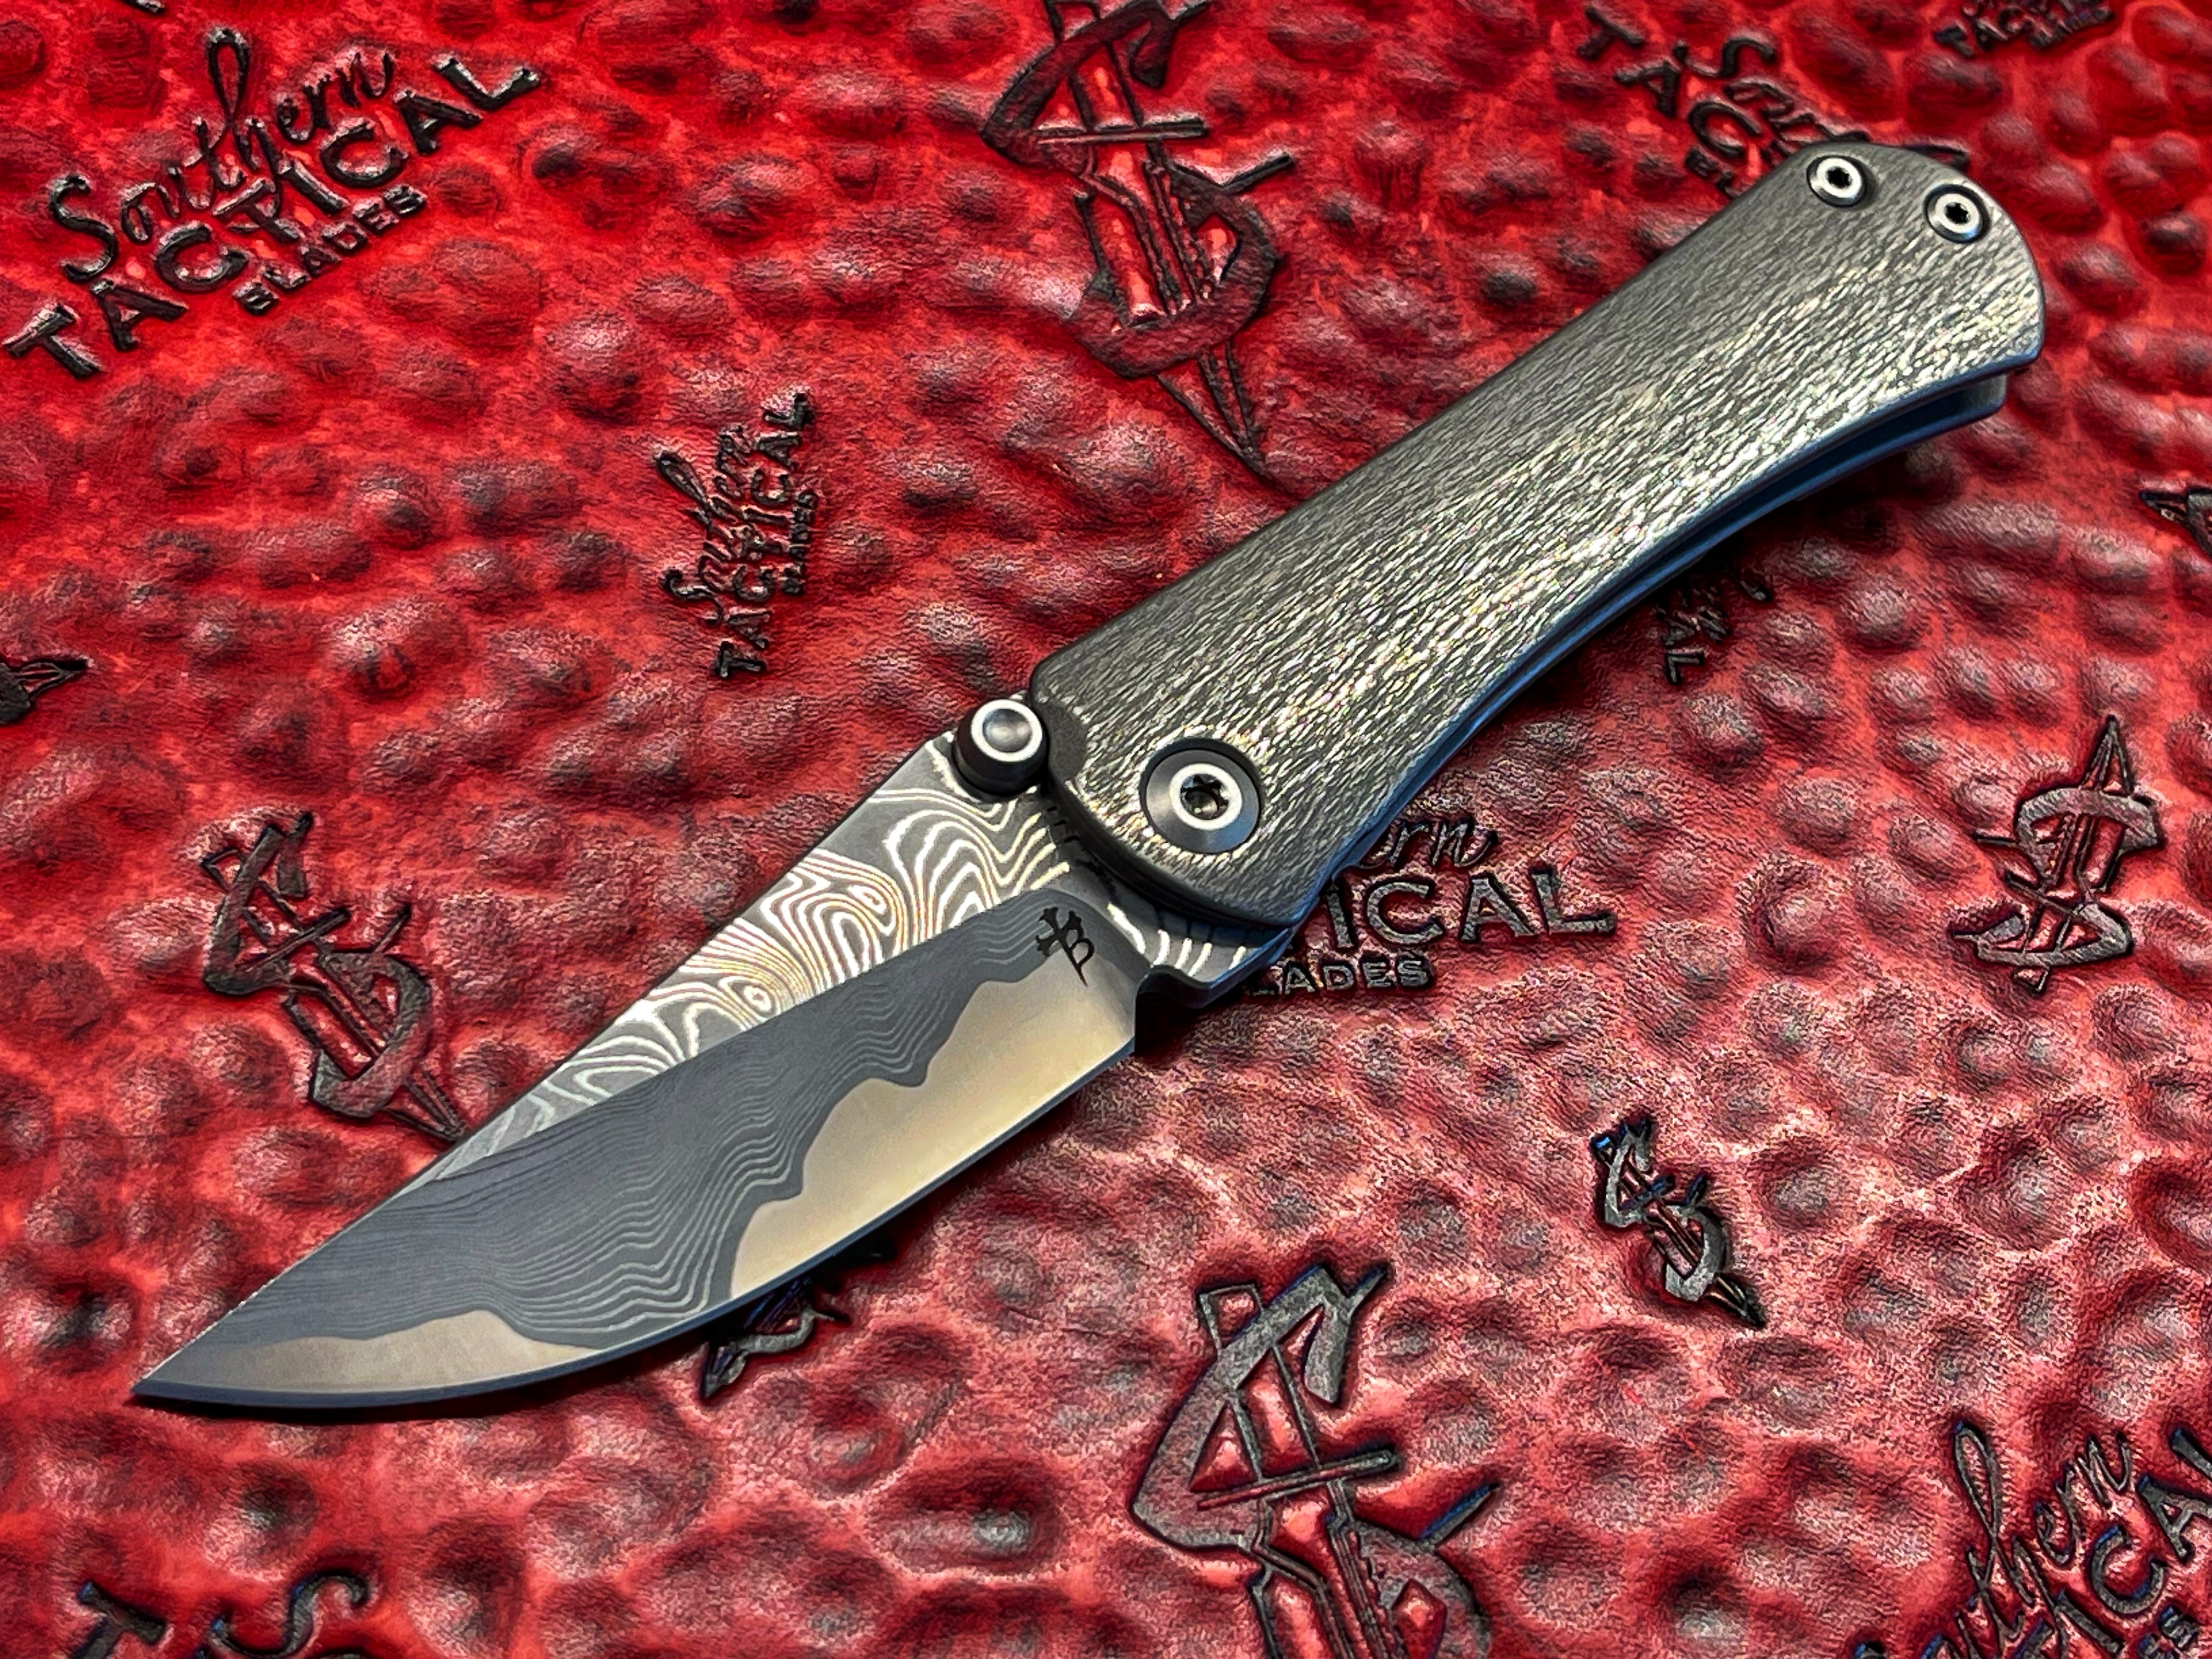 Broka Blades SBKF Custom Folder - Vegas Forge San Mai Blade, Barked Titanium Scales